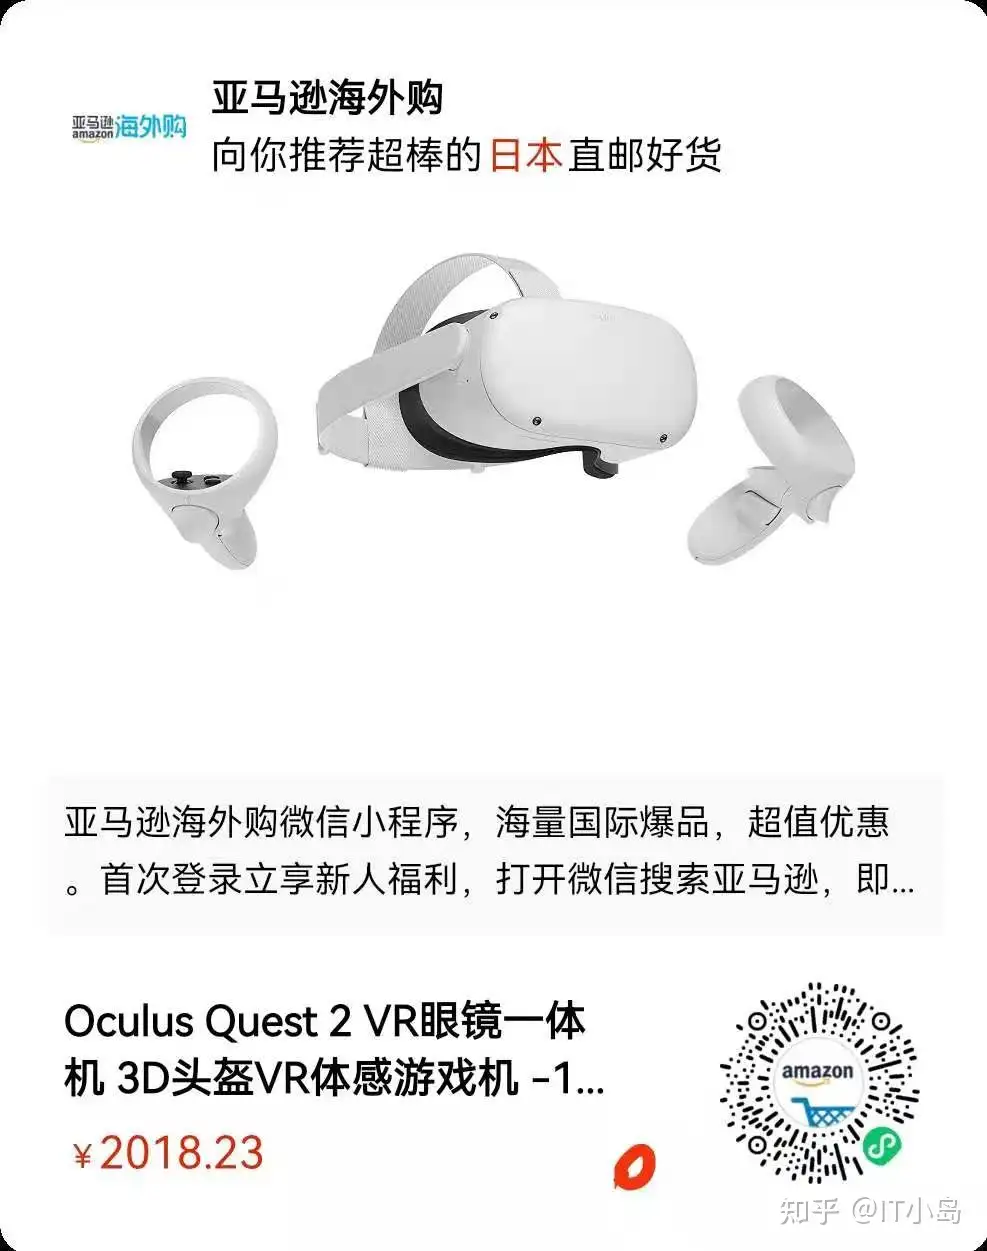 oculus quest2 都有那些省钱的购买渠道？ - 知乎